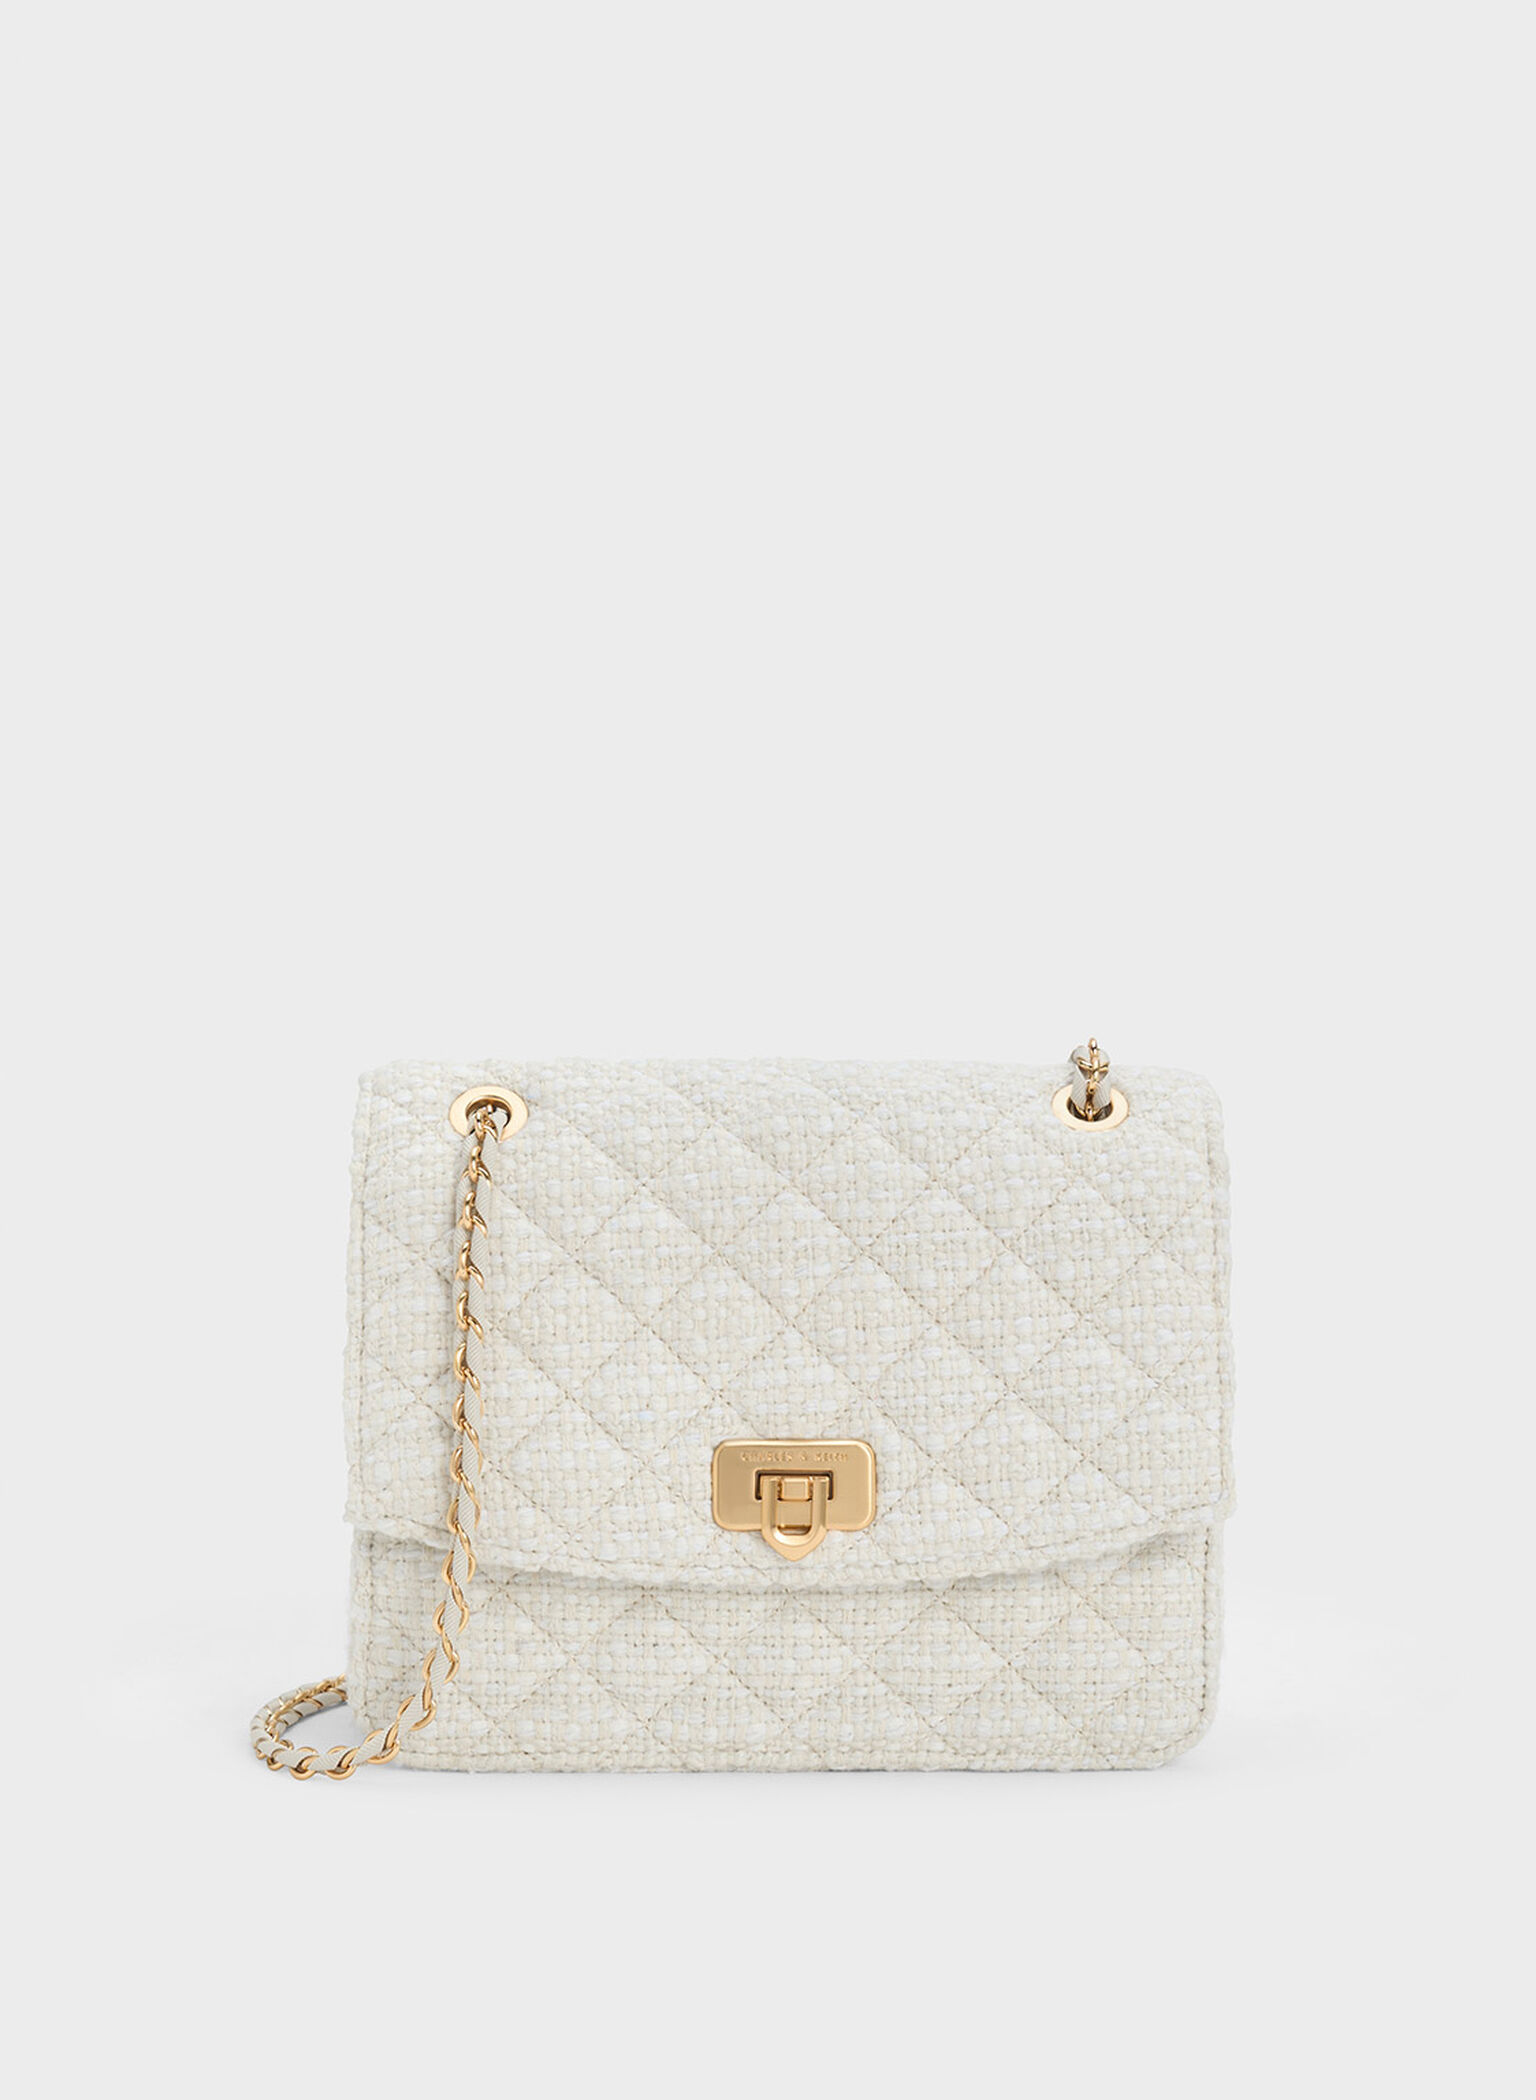 Chanel Chain Strap Handbag